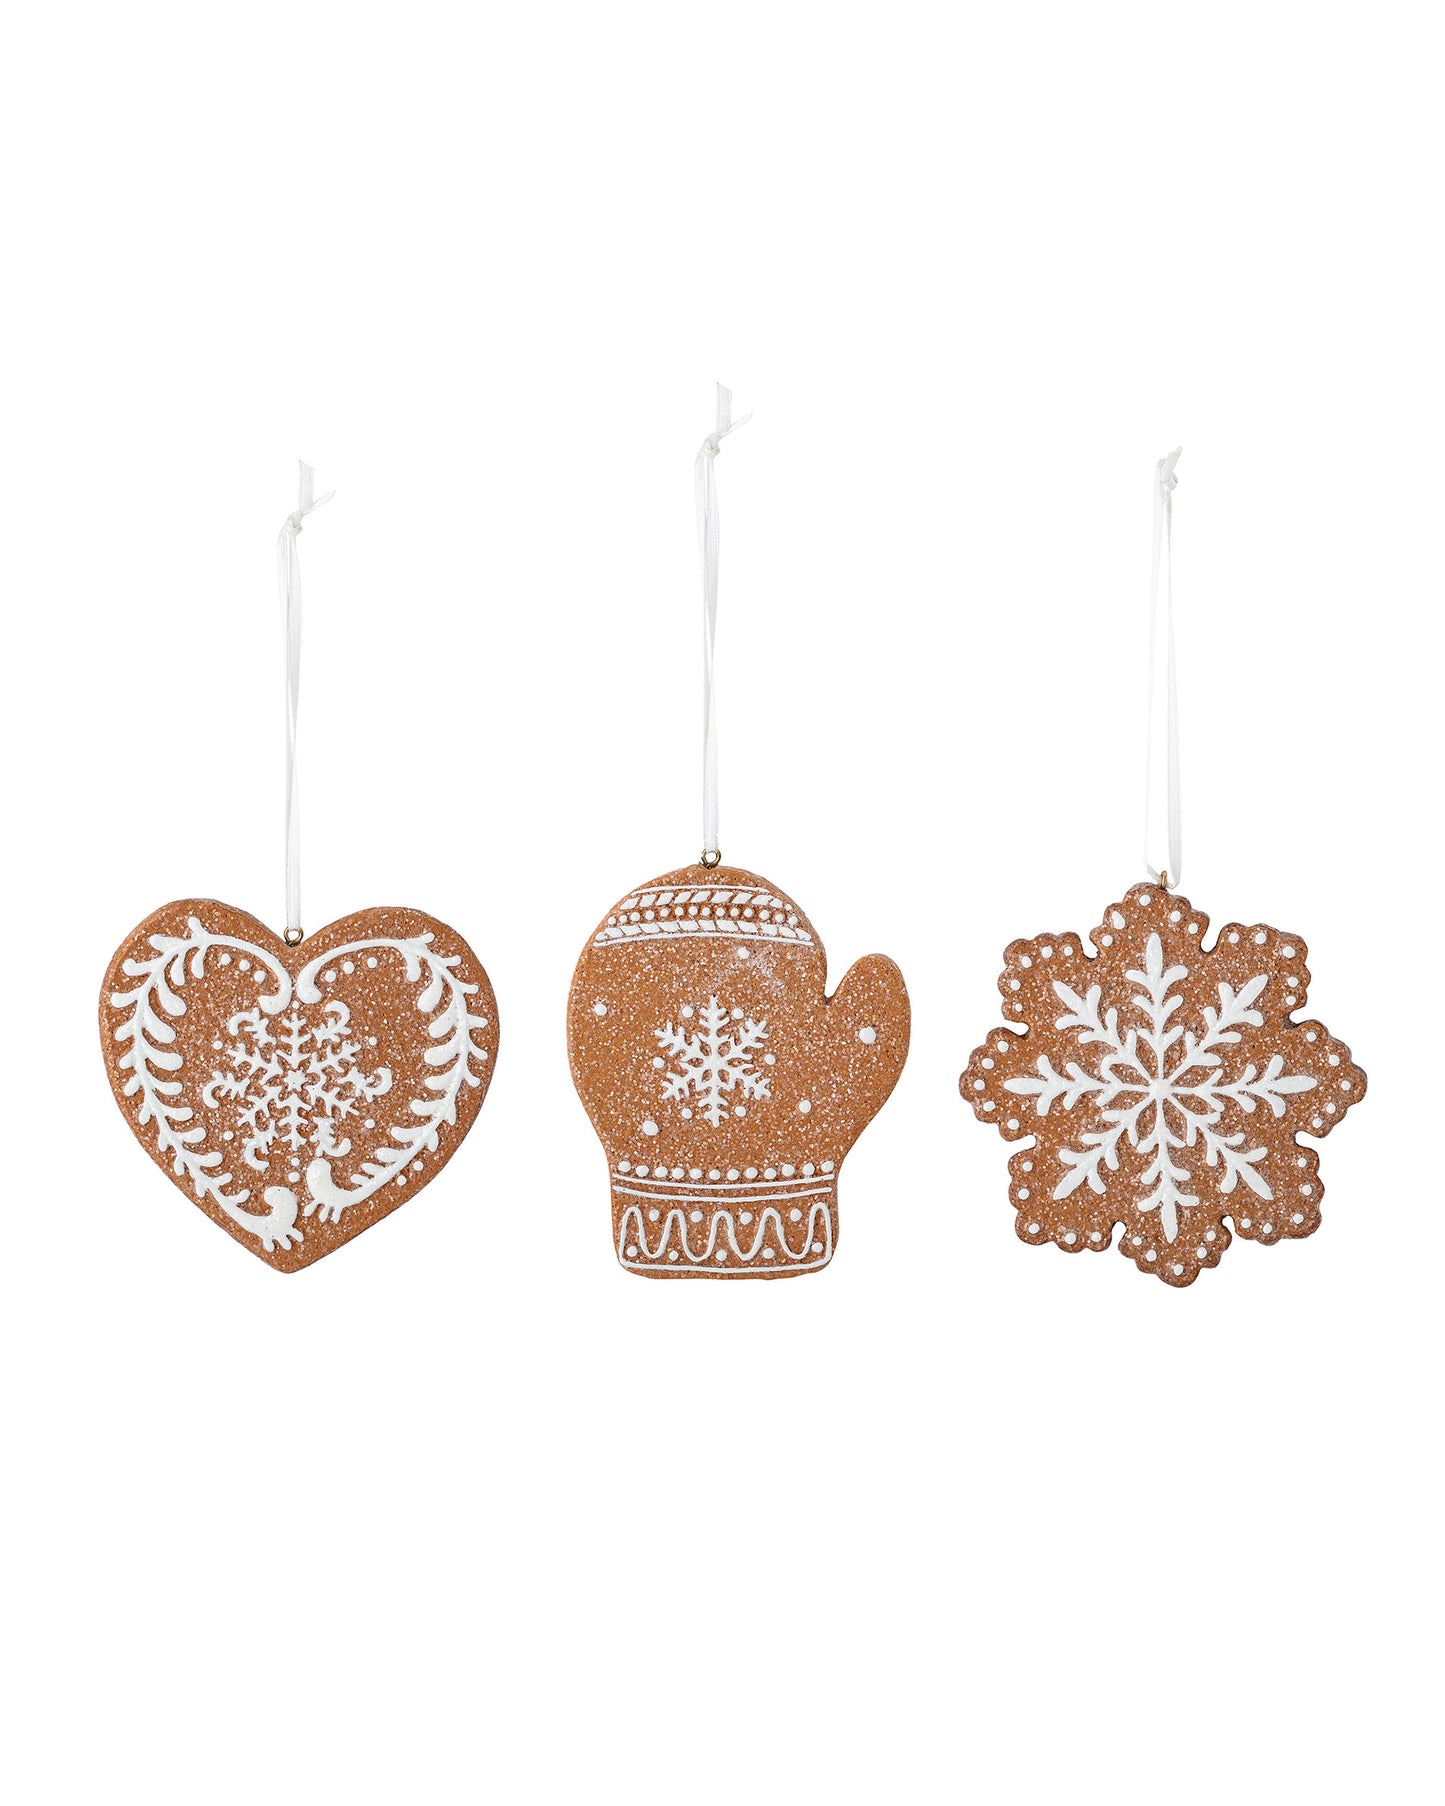 Gingerbread Christmas ornament, set of 3 - MagicLinen